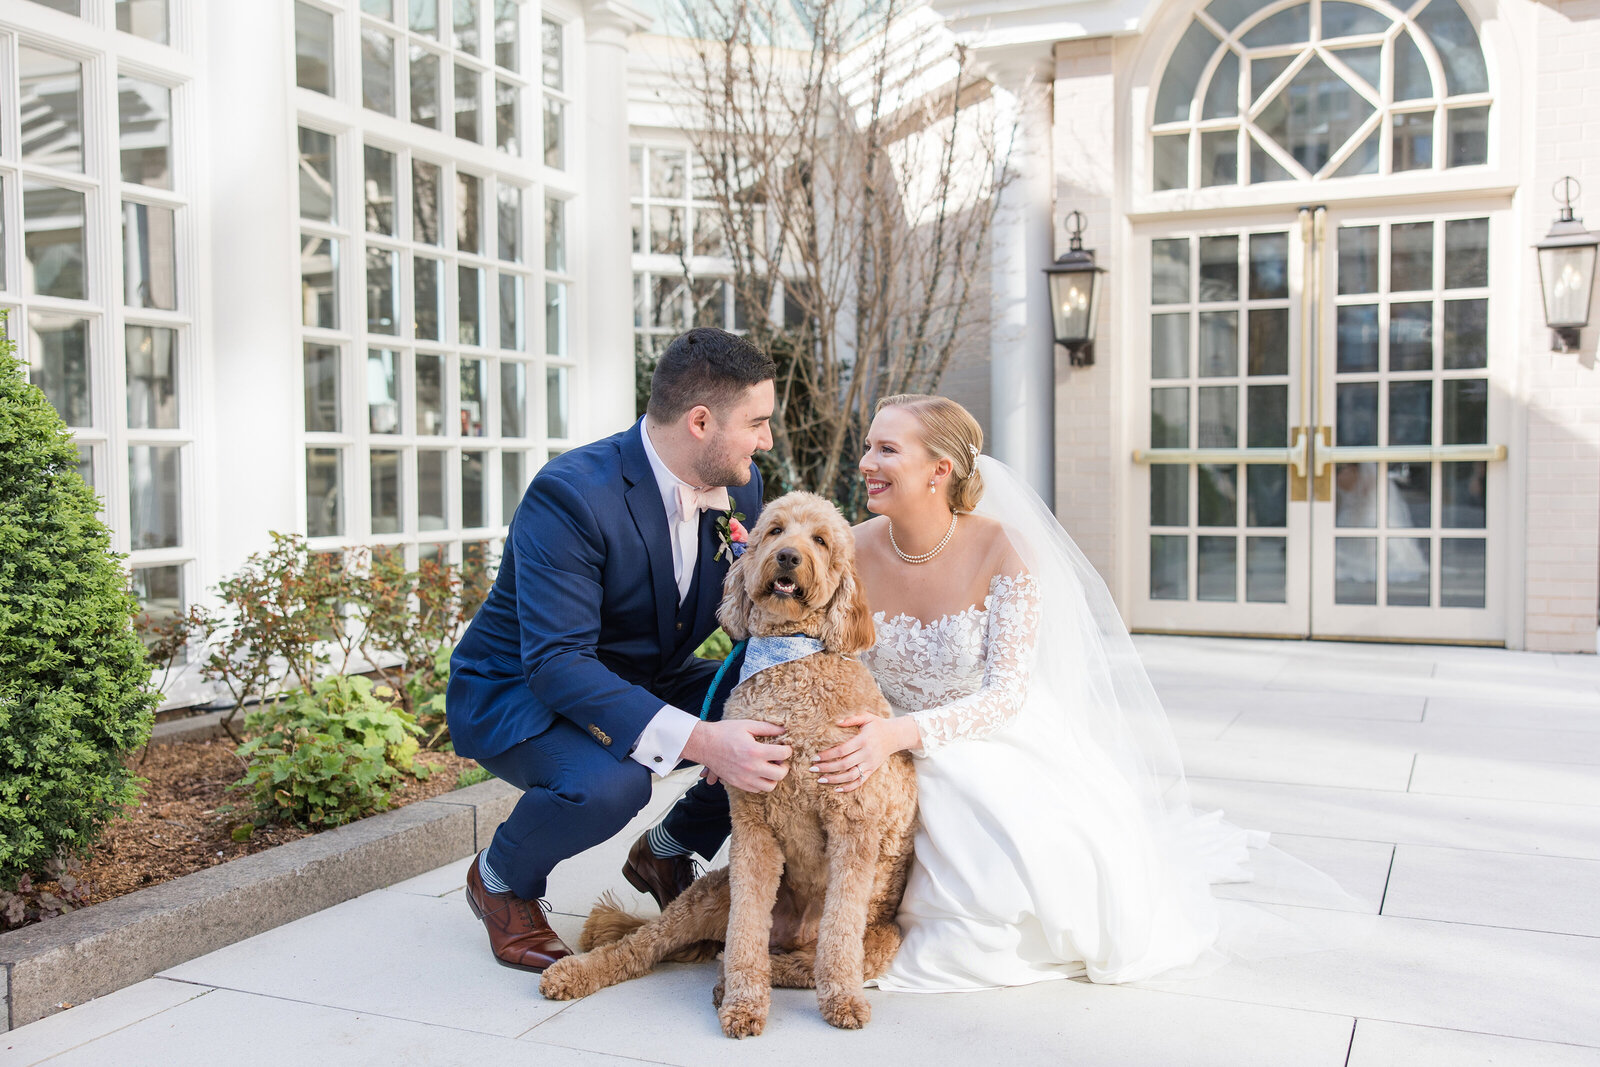 Fairmont Washinton D.C. wedding photo with dog by Annapolis Maryland photographer Christa Rae Photography